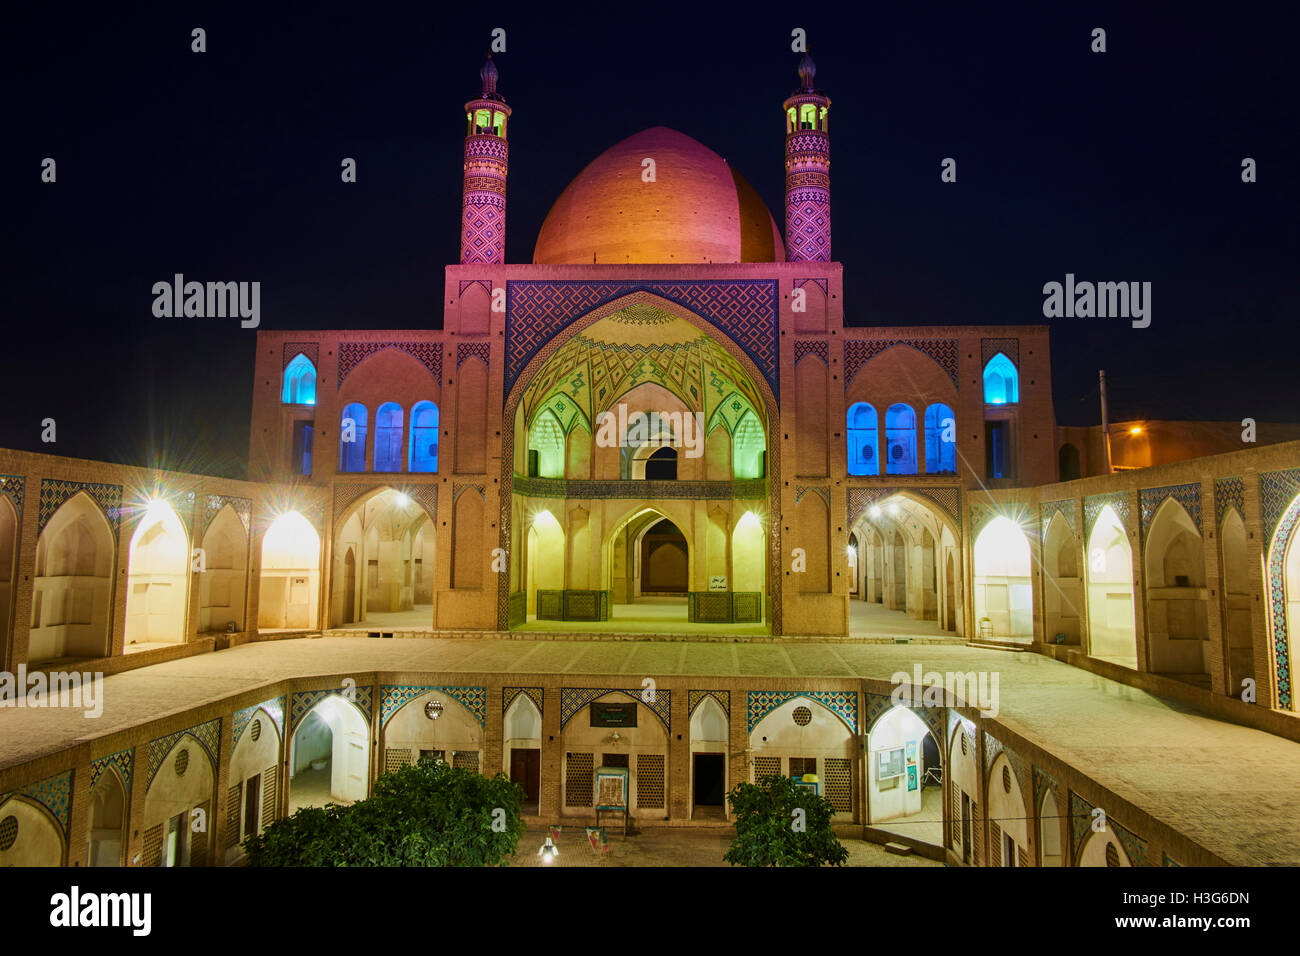 Iran, Isfahan province, Kashan city, Friday mosque Stock Photo